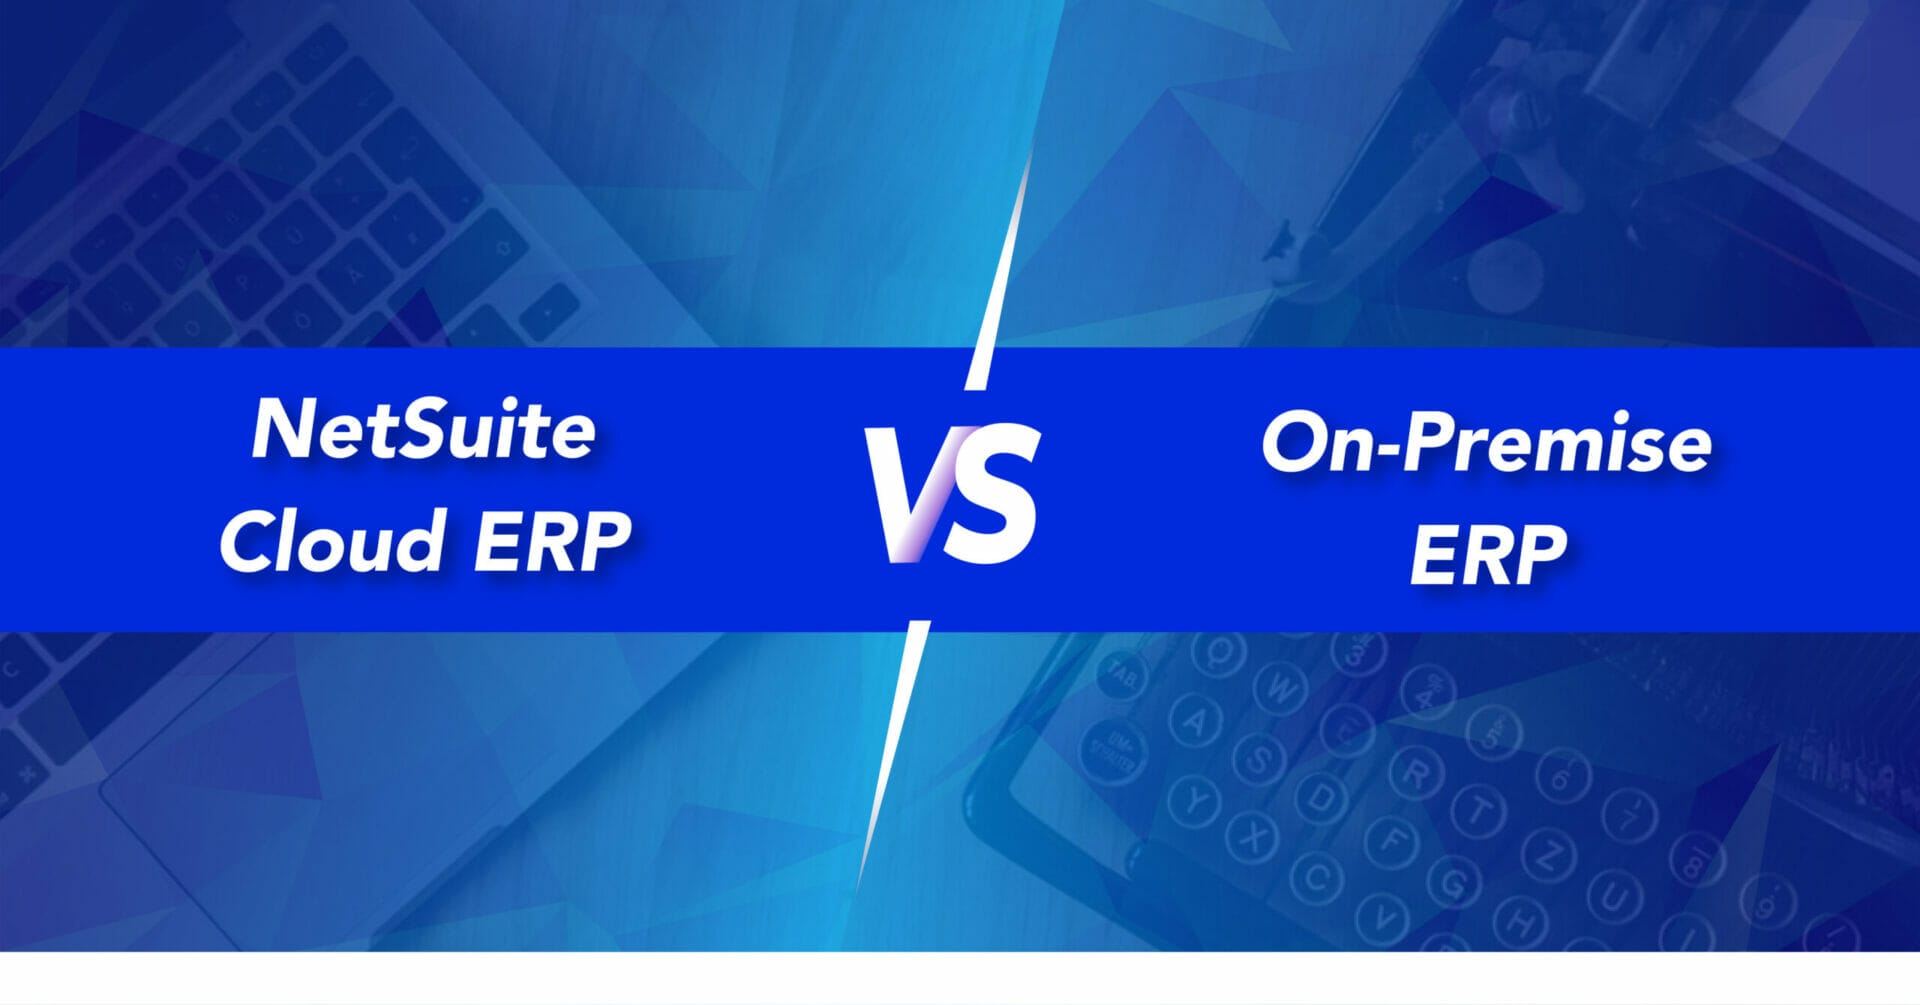 NetSuite cloud ERP vs On-Premise ERP